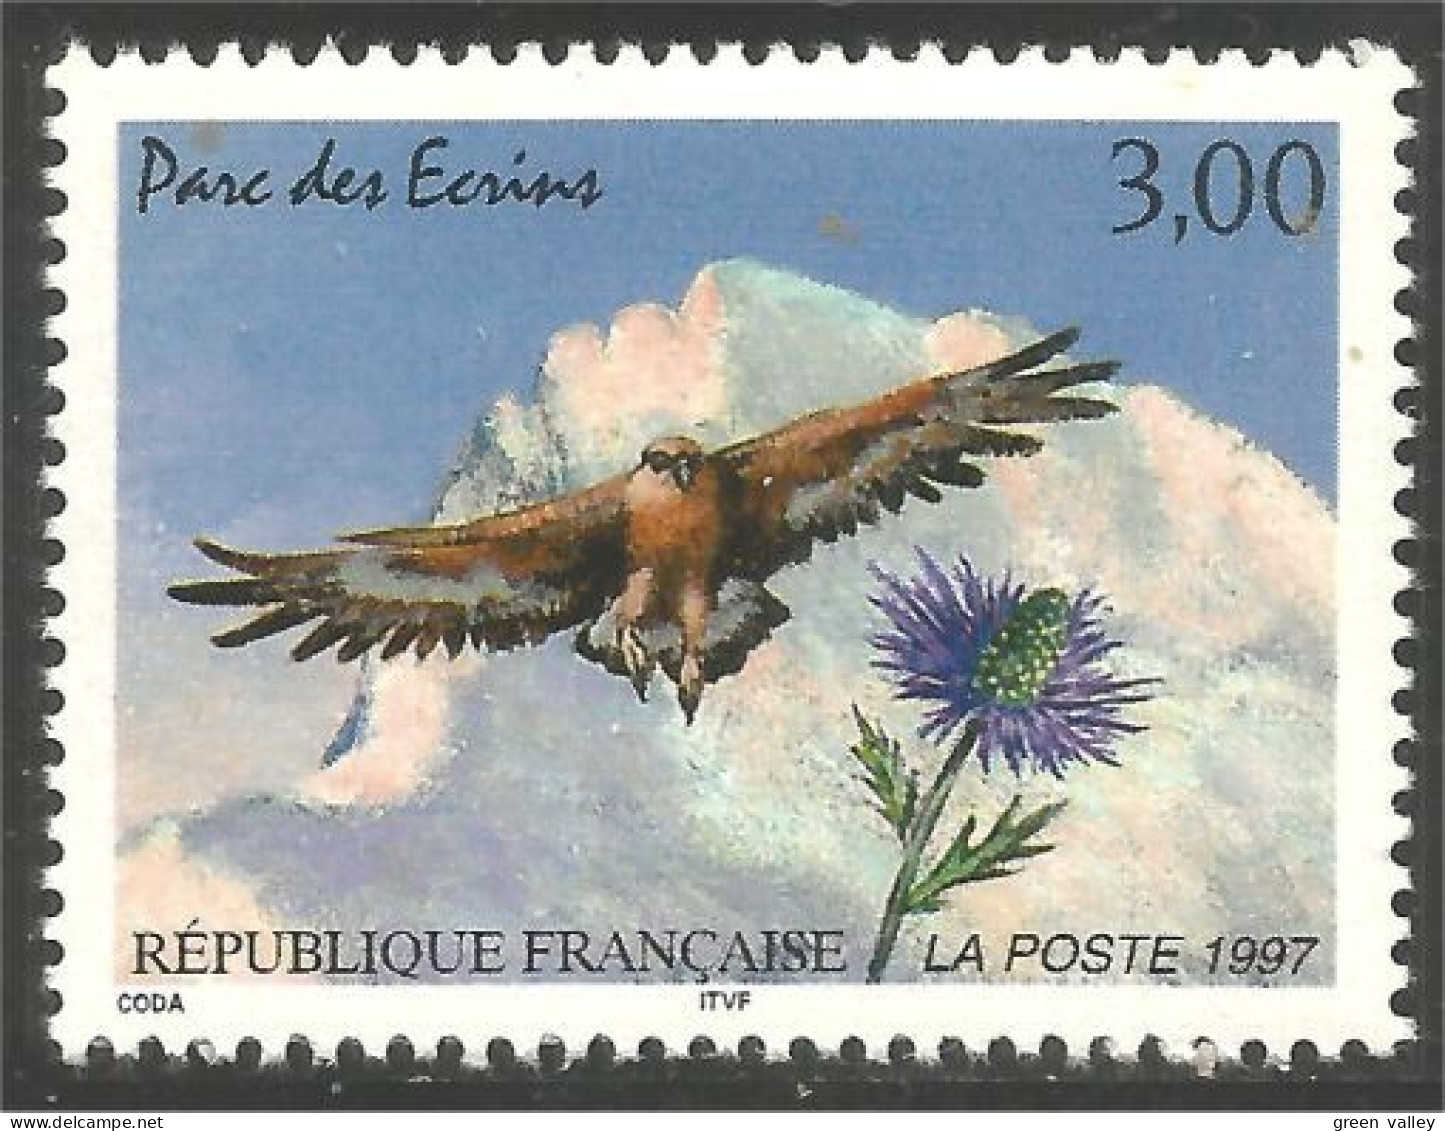 360 France Yv 3054 Ecrins Aigle Rotal Eagle Adler Aquila MNH ** Neuf SC (3054-1a) - Adler & Greifvögel